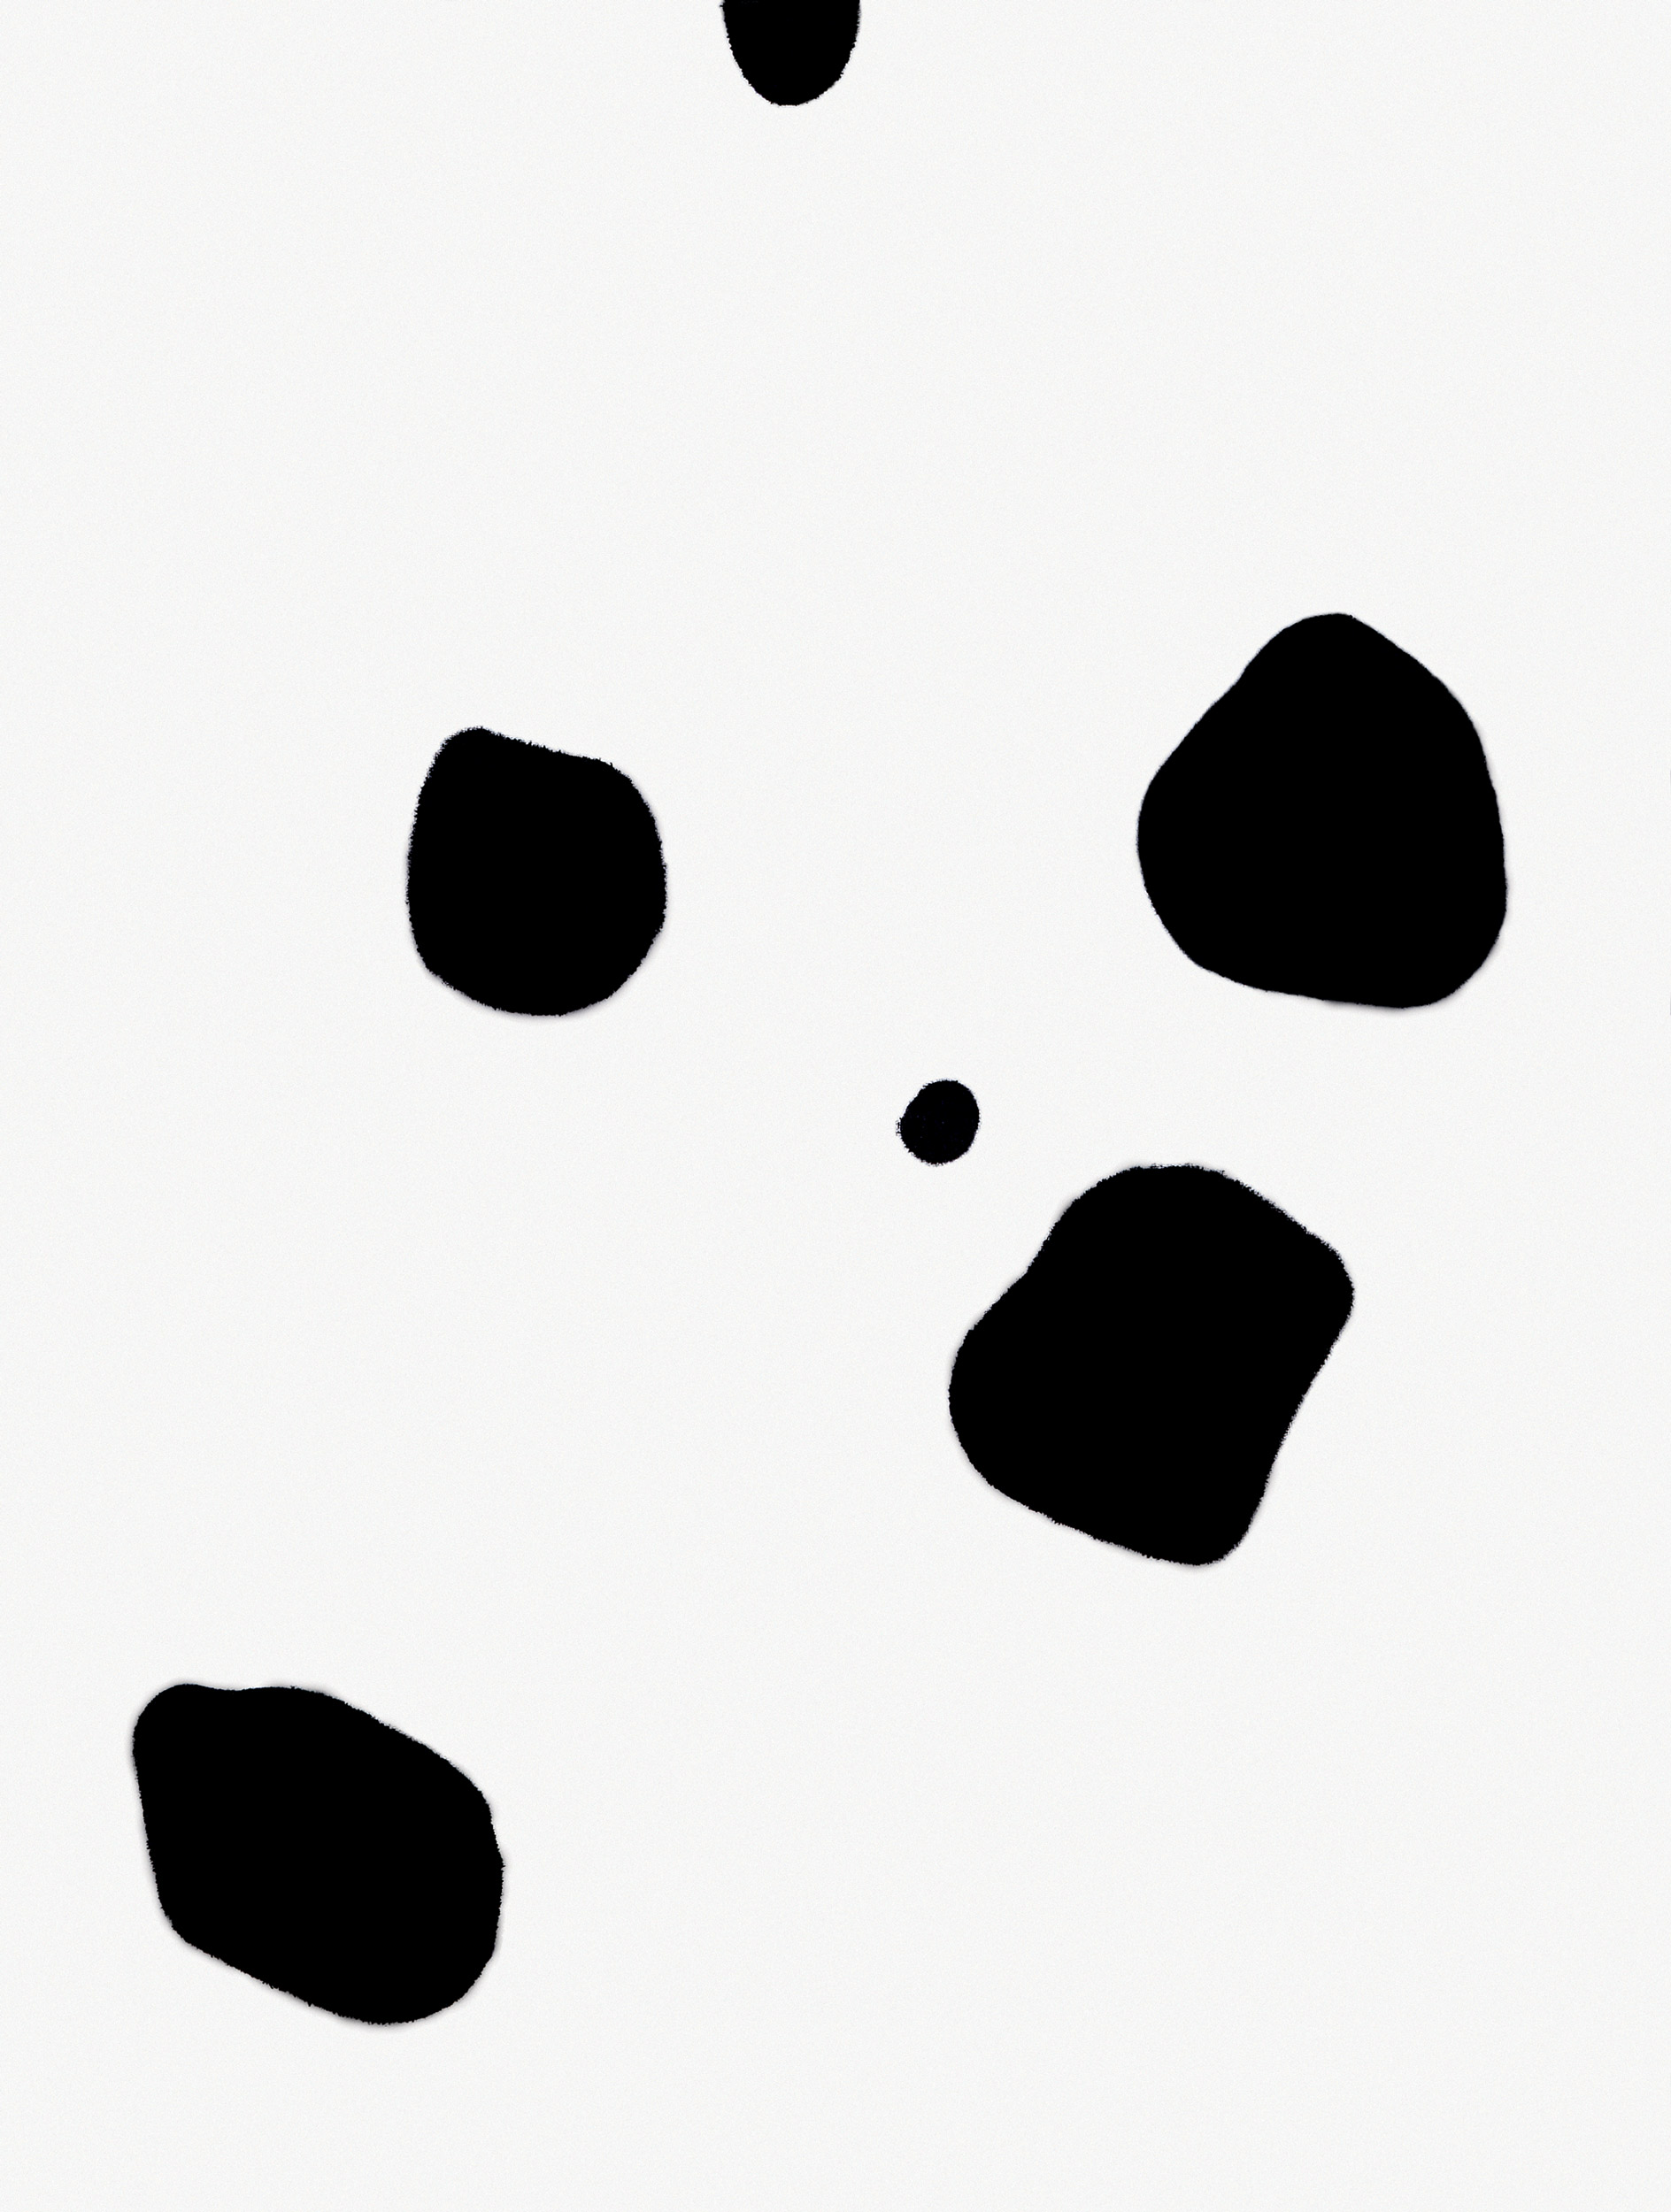 Polke or Baby Dalmatian? (03)